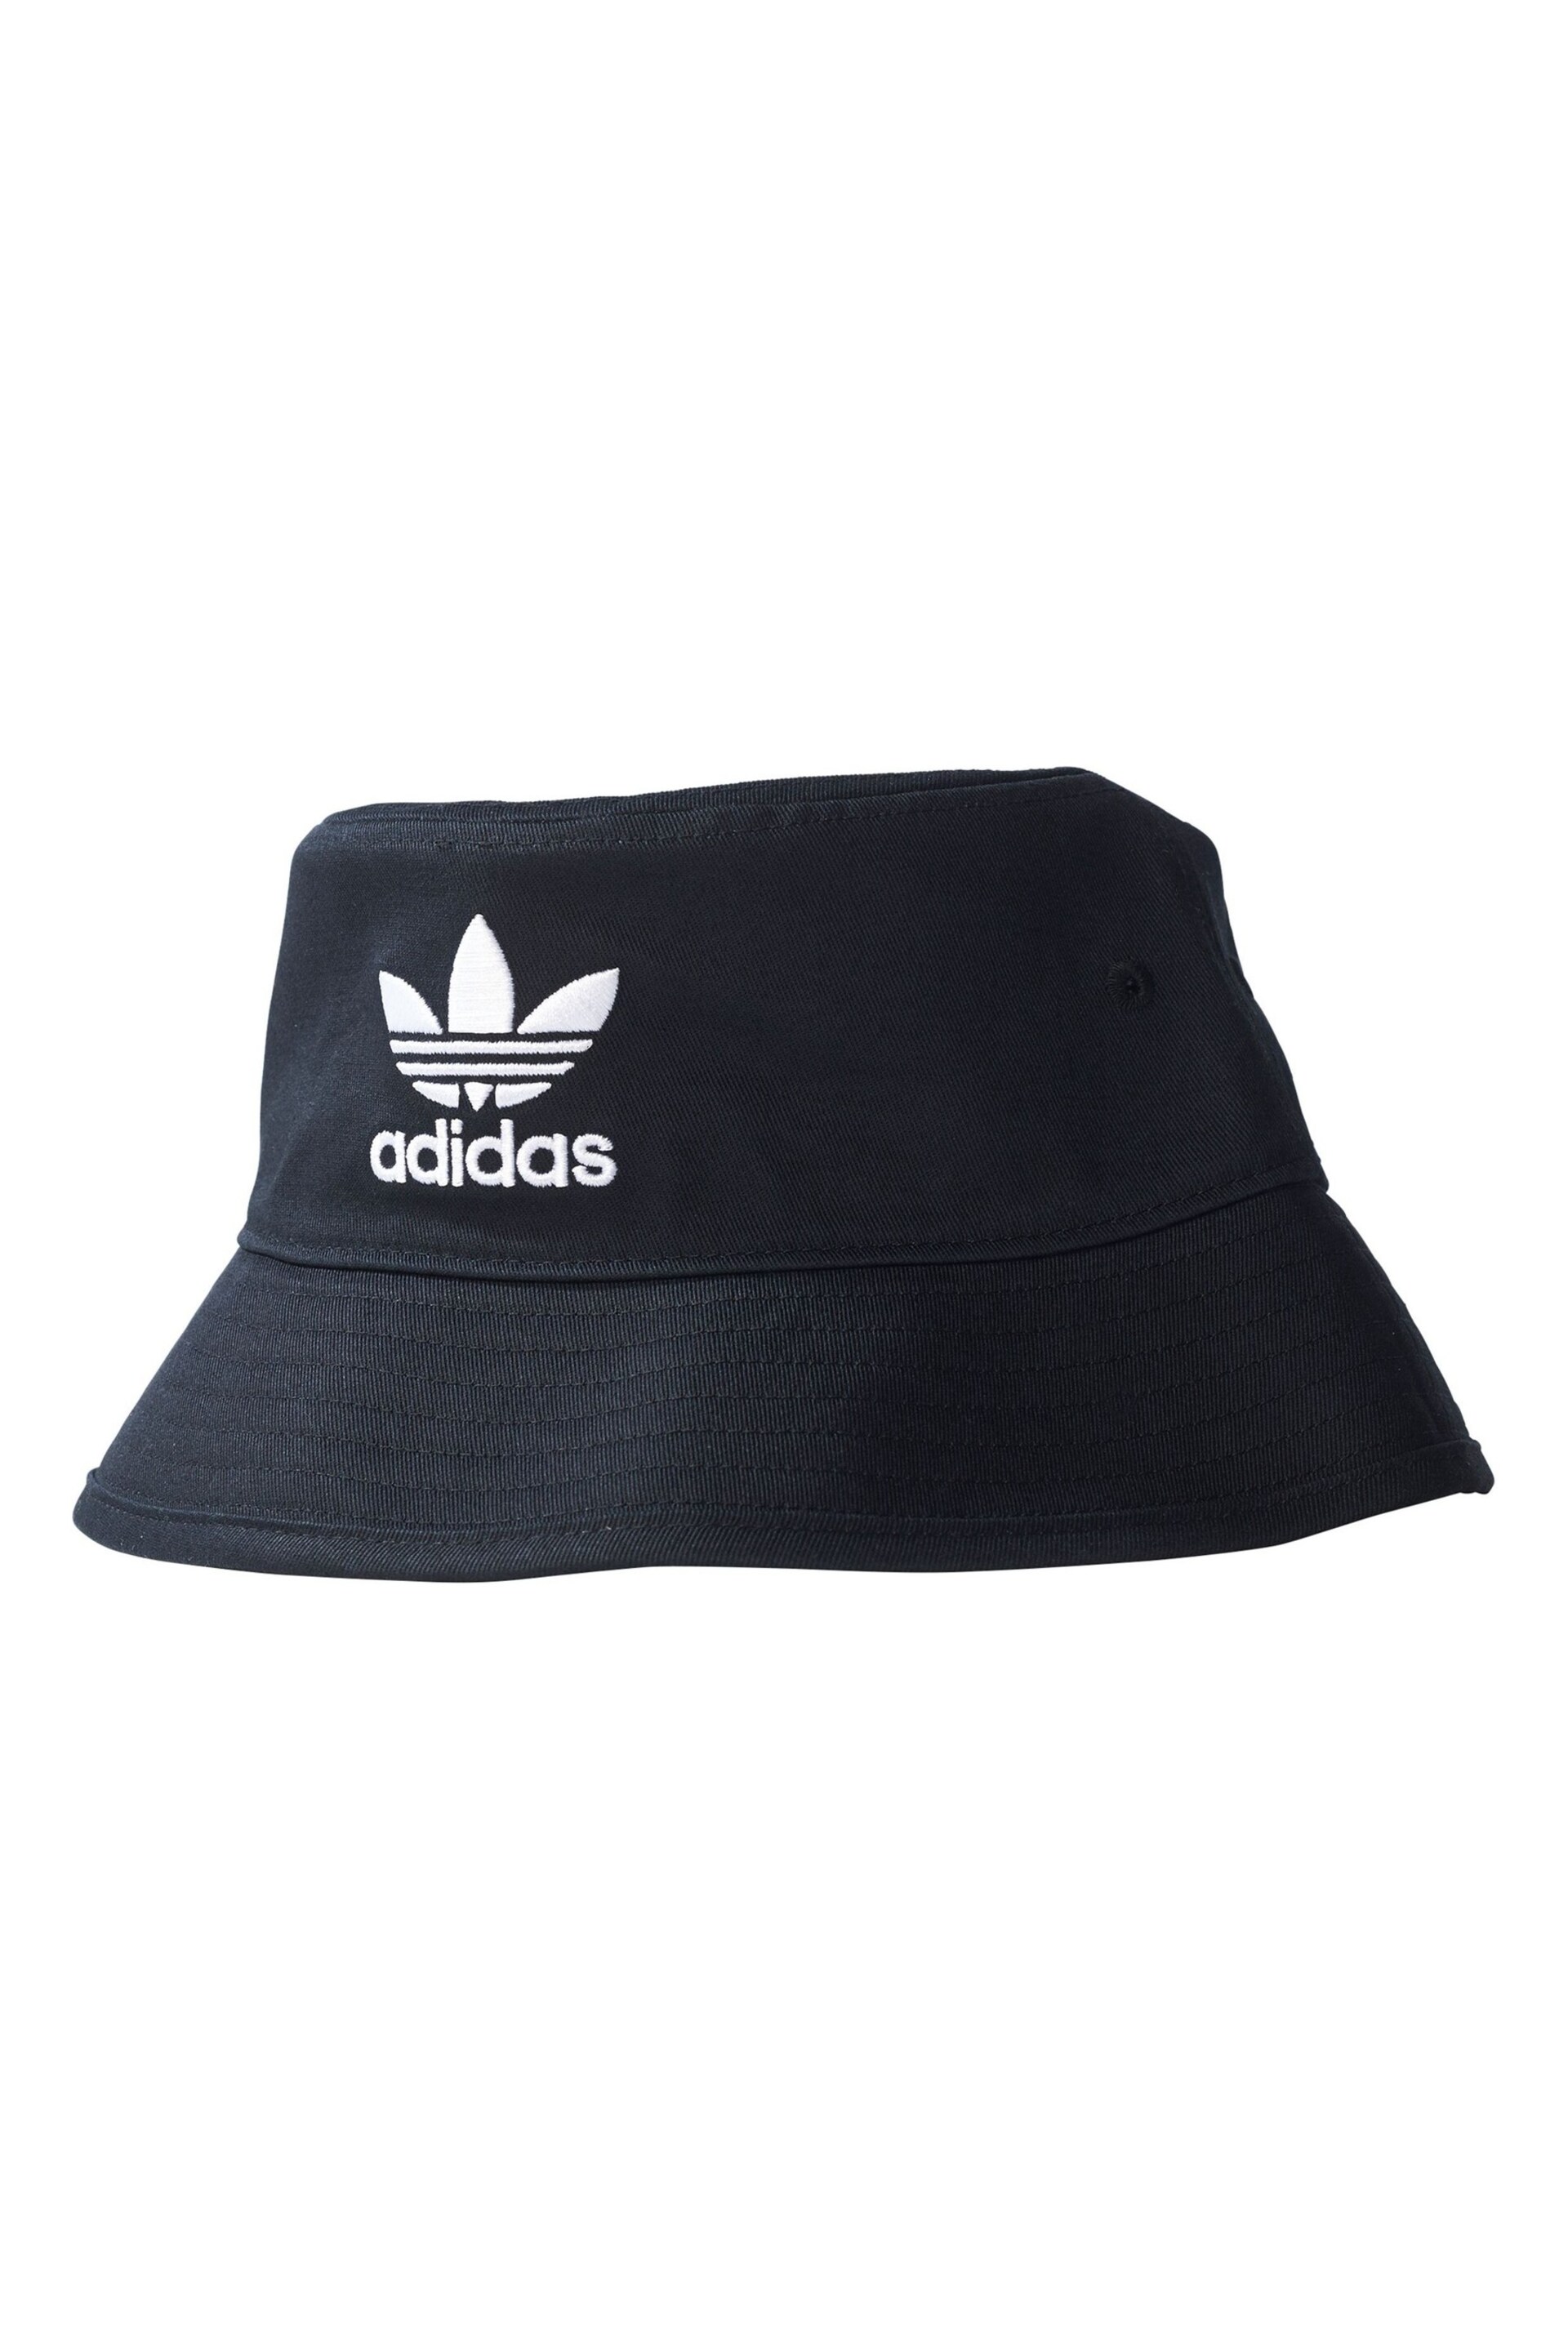 adidas Originals Trefoil Bucket Hat - Image 4 of 7